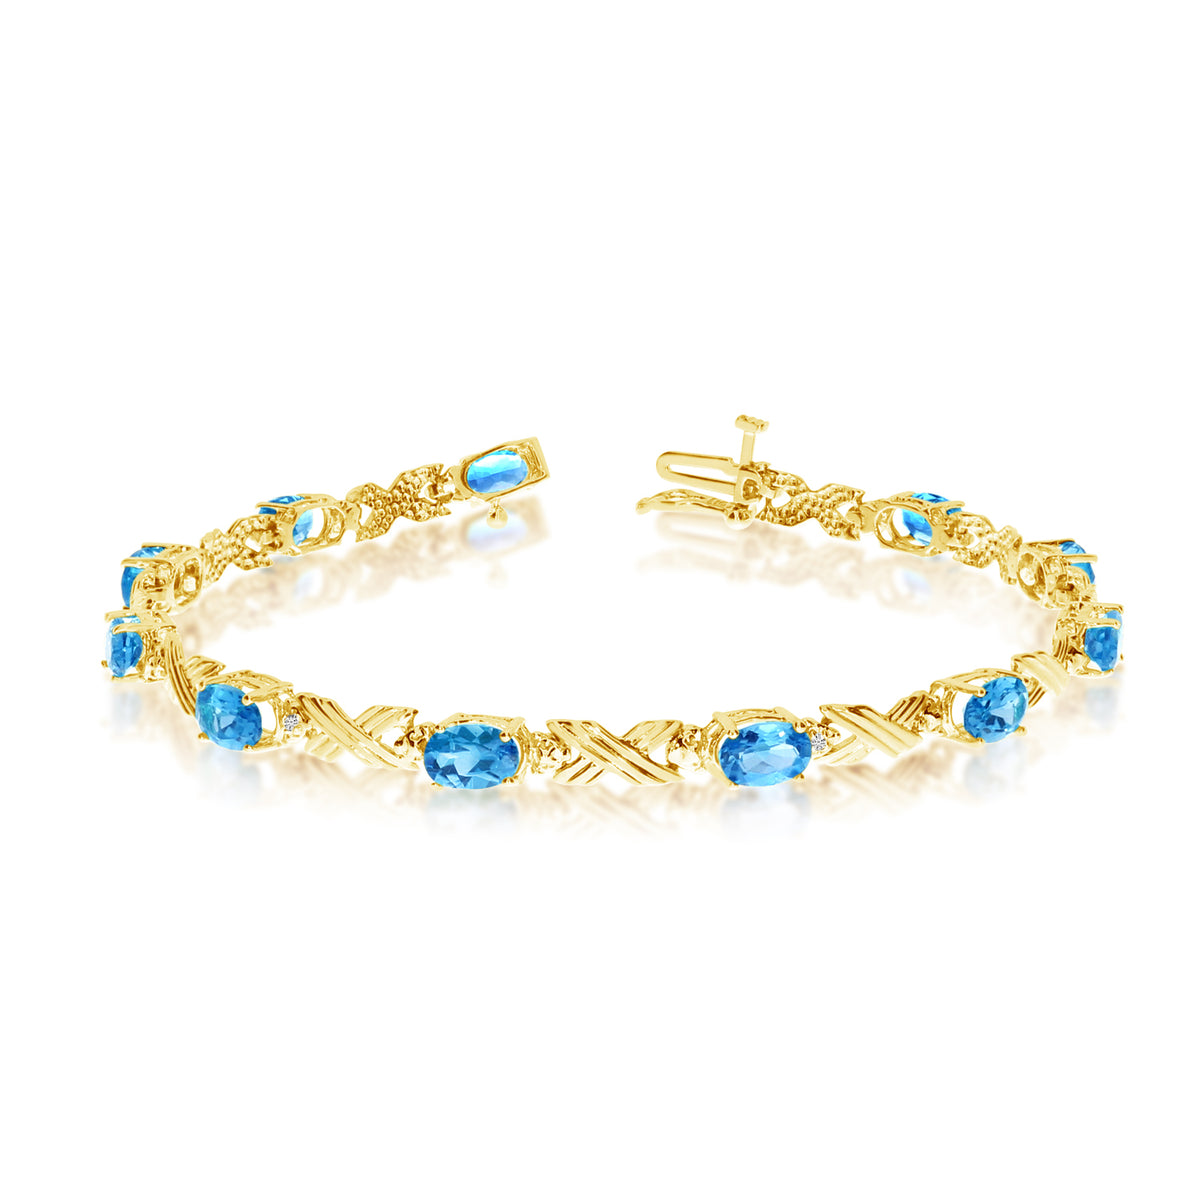 10K Yellow Gold Oval Blue Topaz Stones And Diamonds Tennis Bracelet, 7" fine designer jewelry for men and women